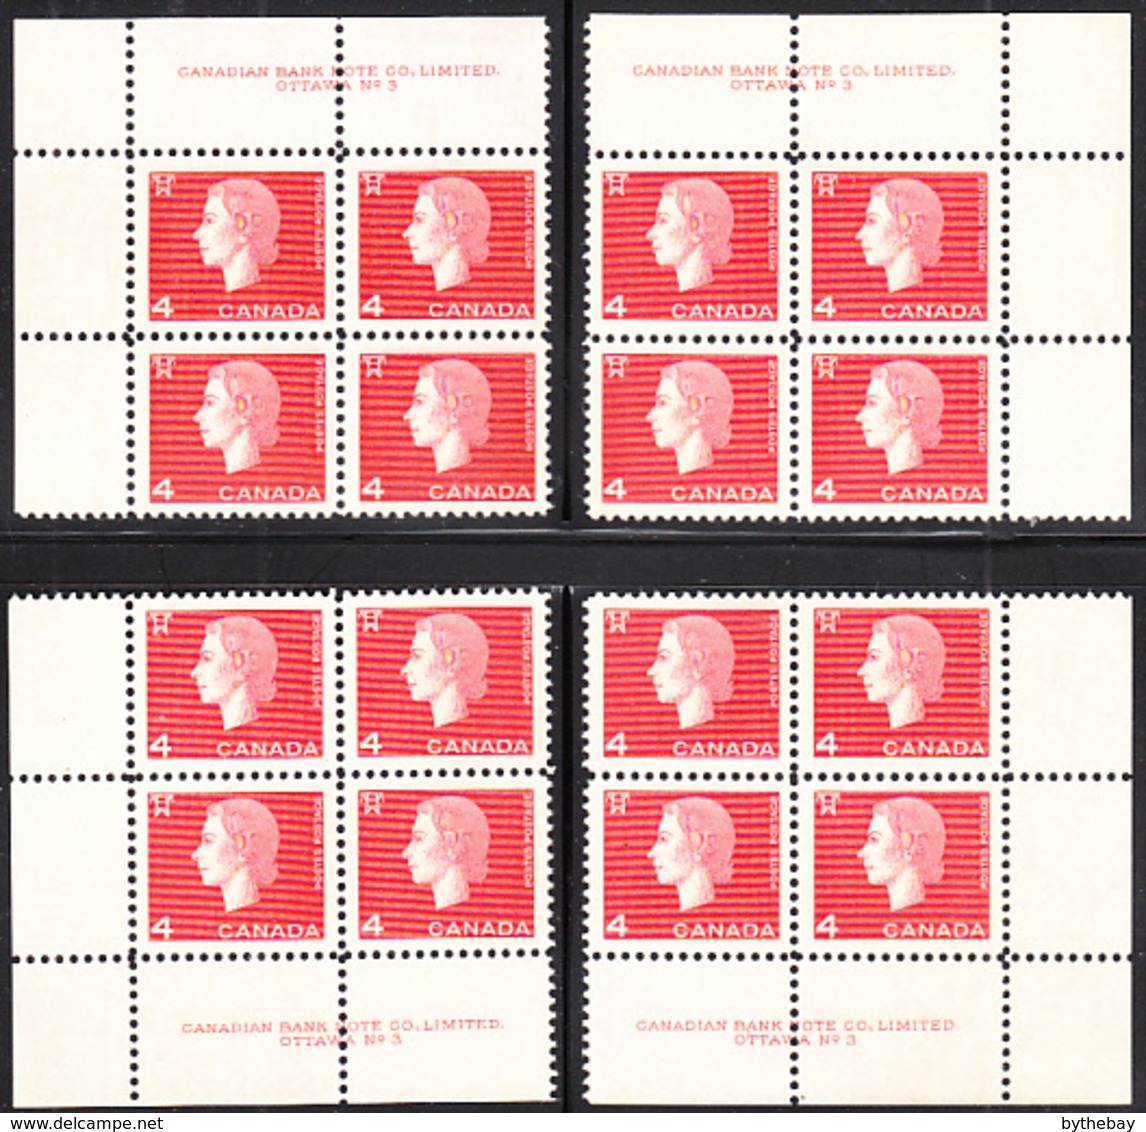 Canada 1963 MNH Sc #404 4c QEII Cameo Plate #3 Set Of 4 Blocks - Plate Number & Inscriptions